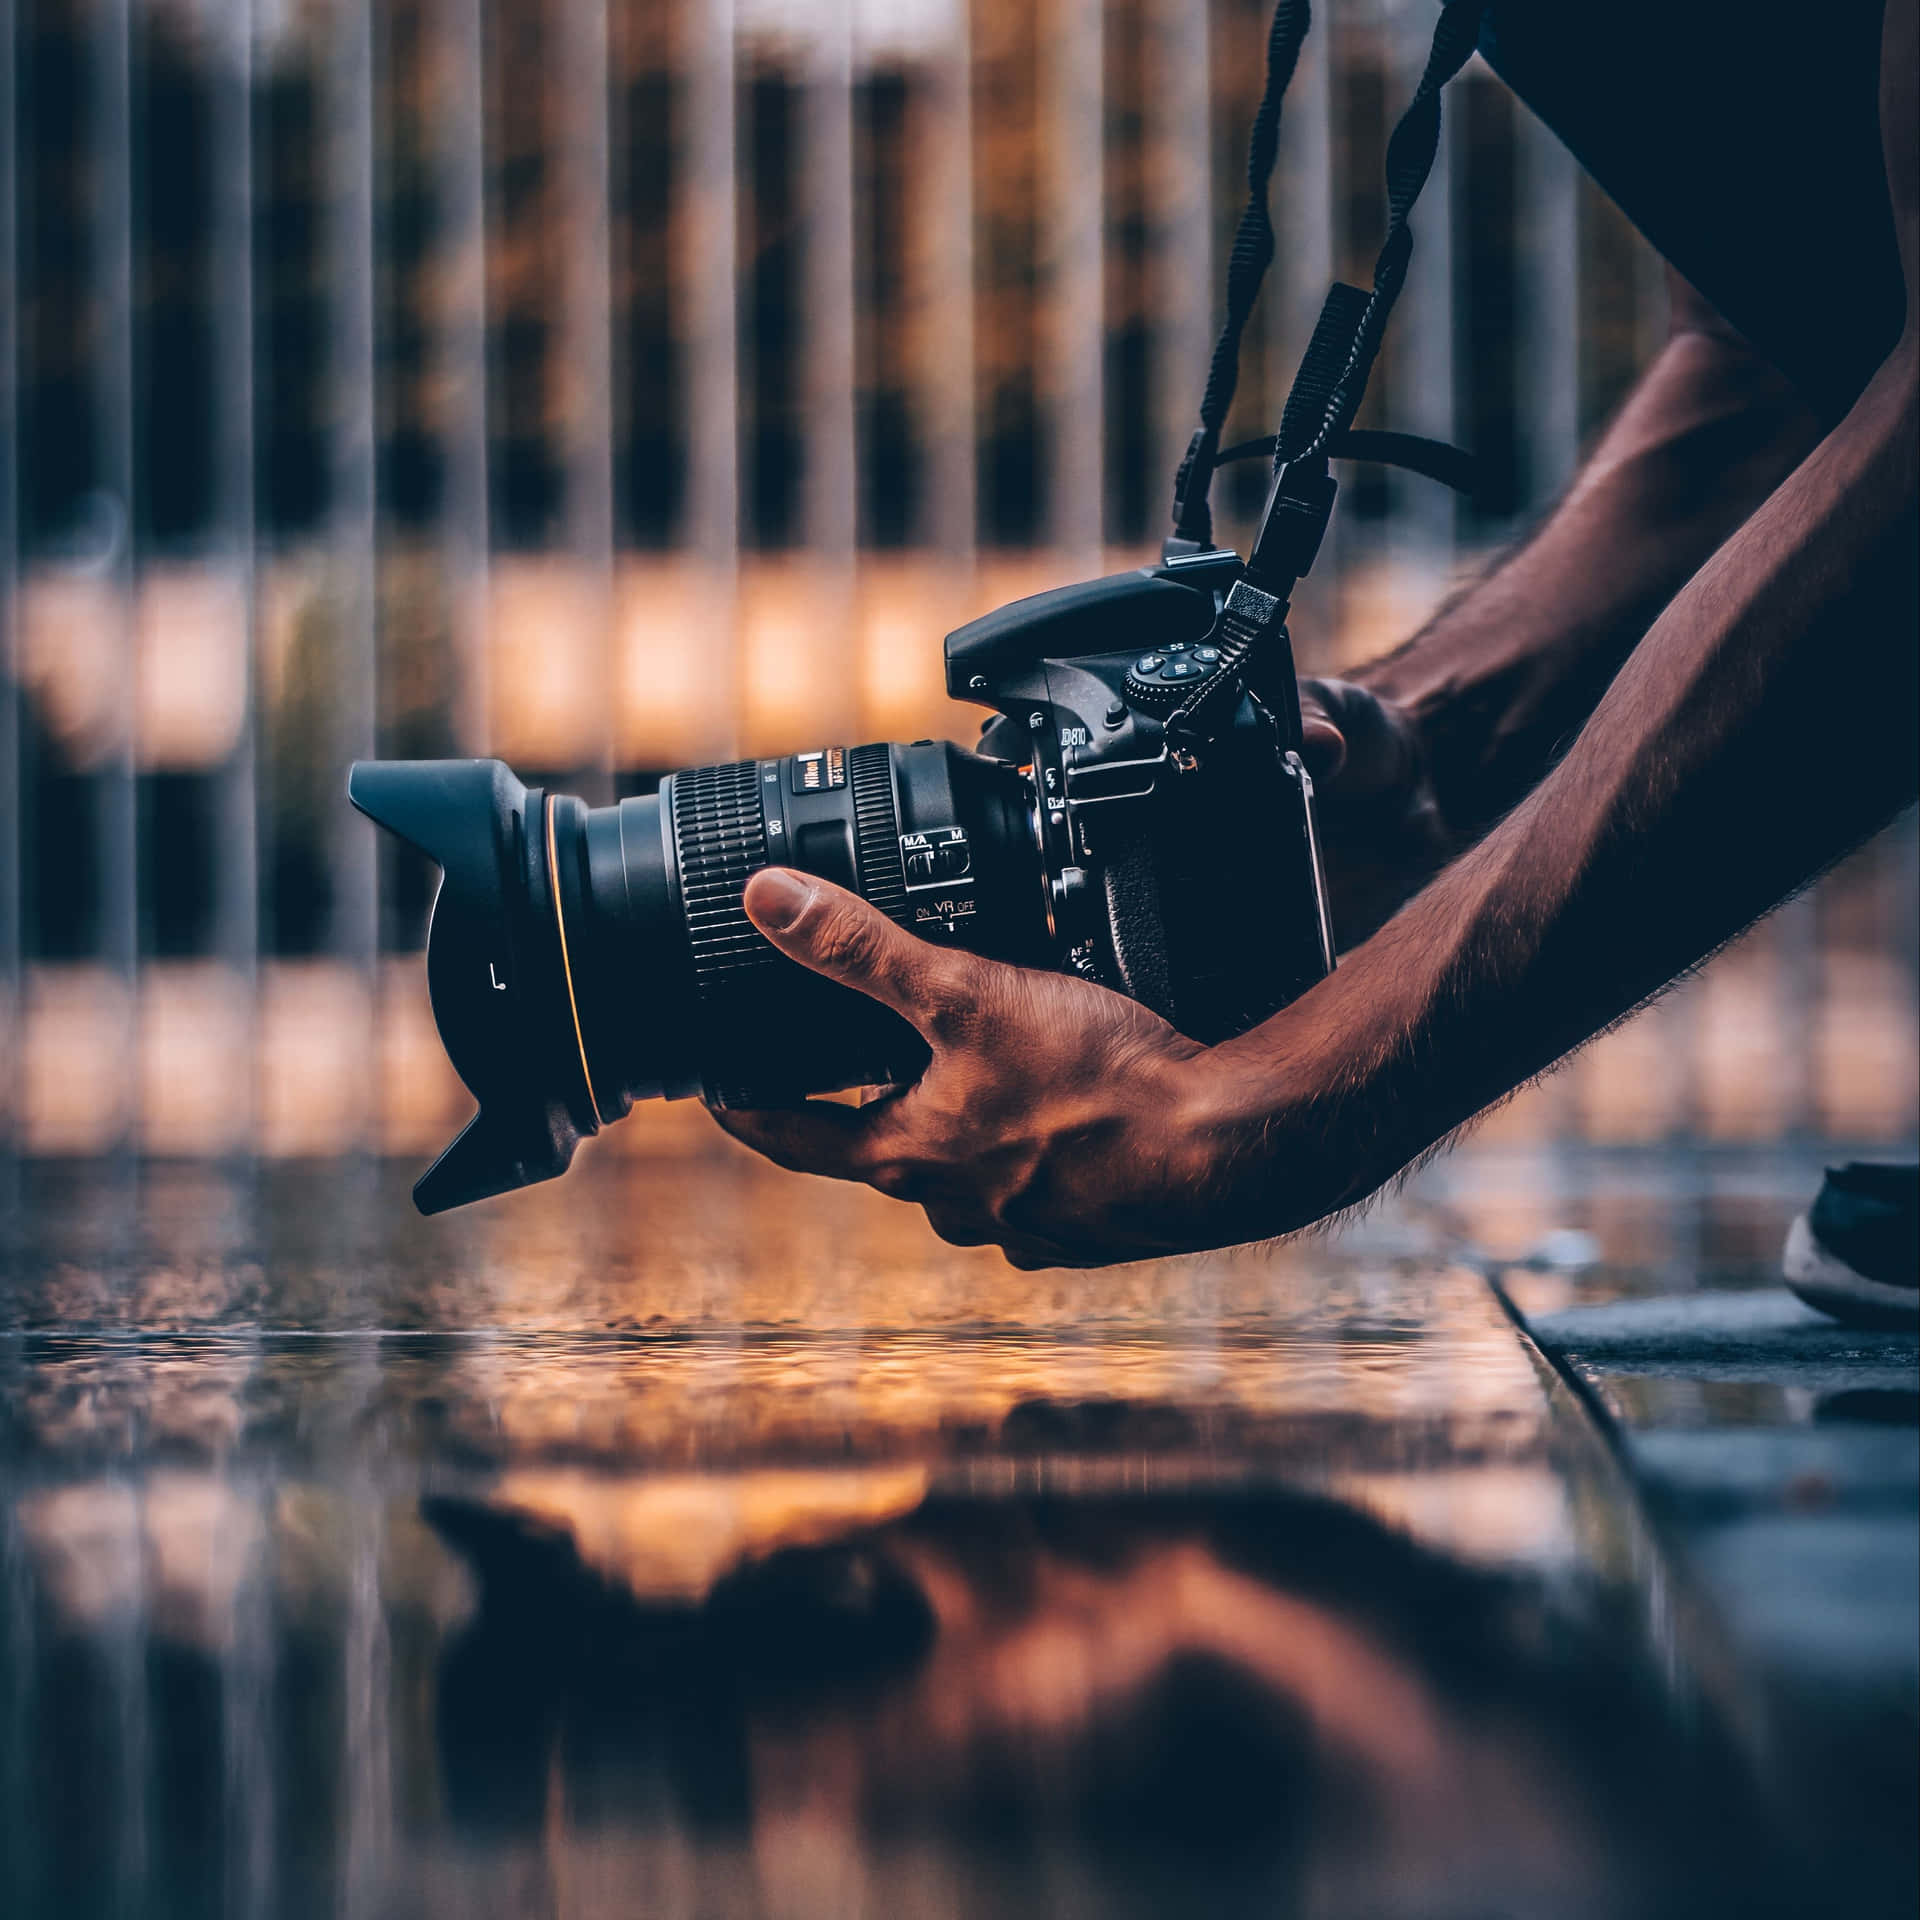 Wet Floor Shooting Photography Camera Background